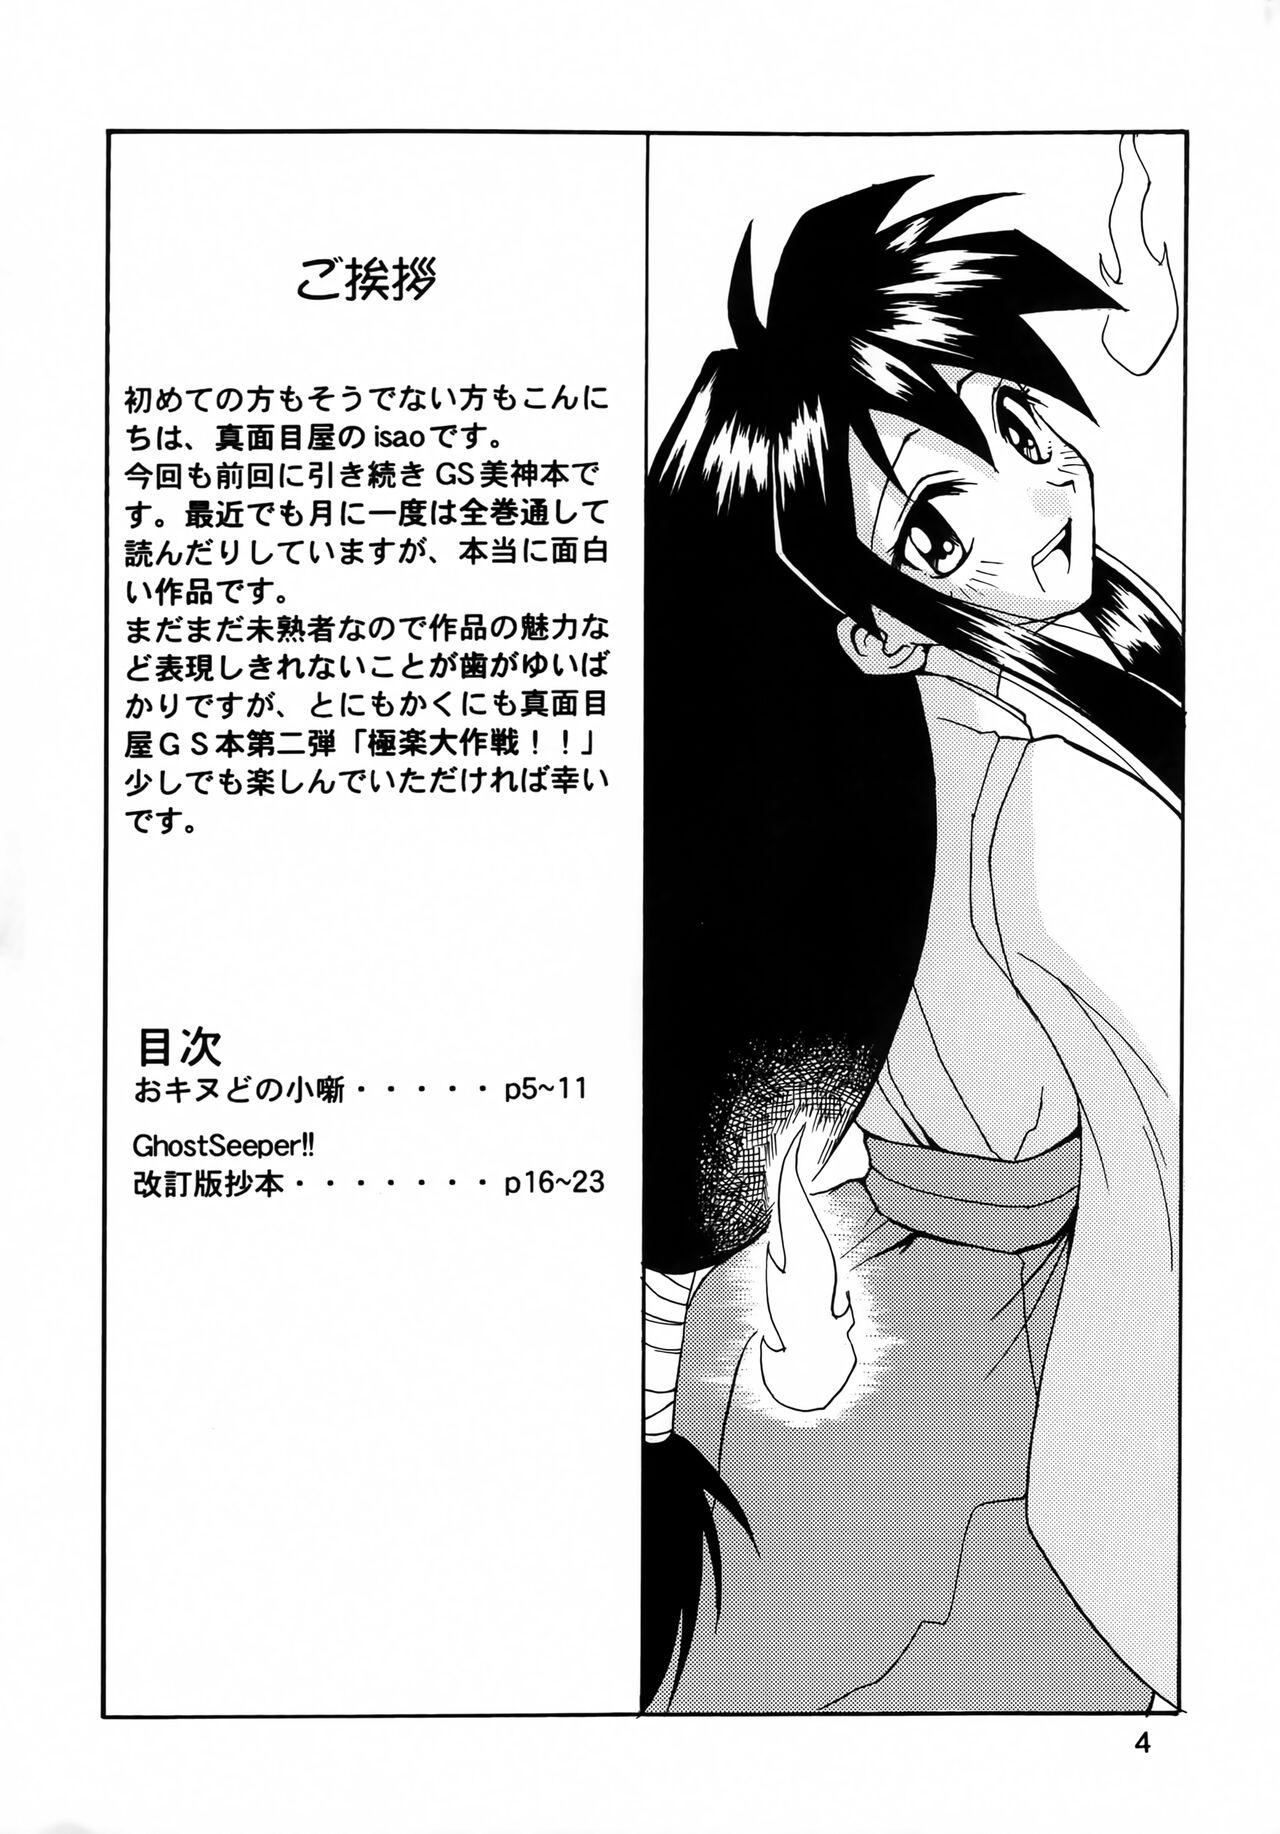 Ftv Girls GhostSweeper!! 2 Gokuraku Daisakusen!! - Ghost sweeper mikami Hair - Page 3